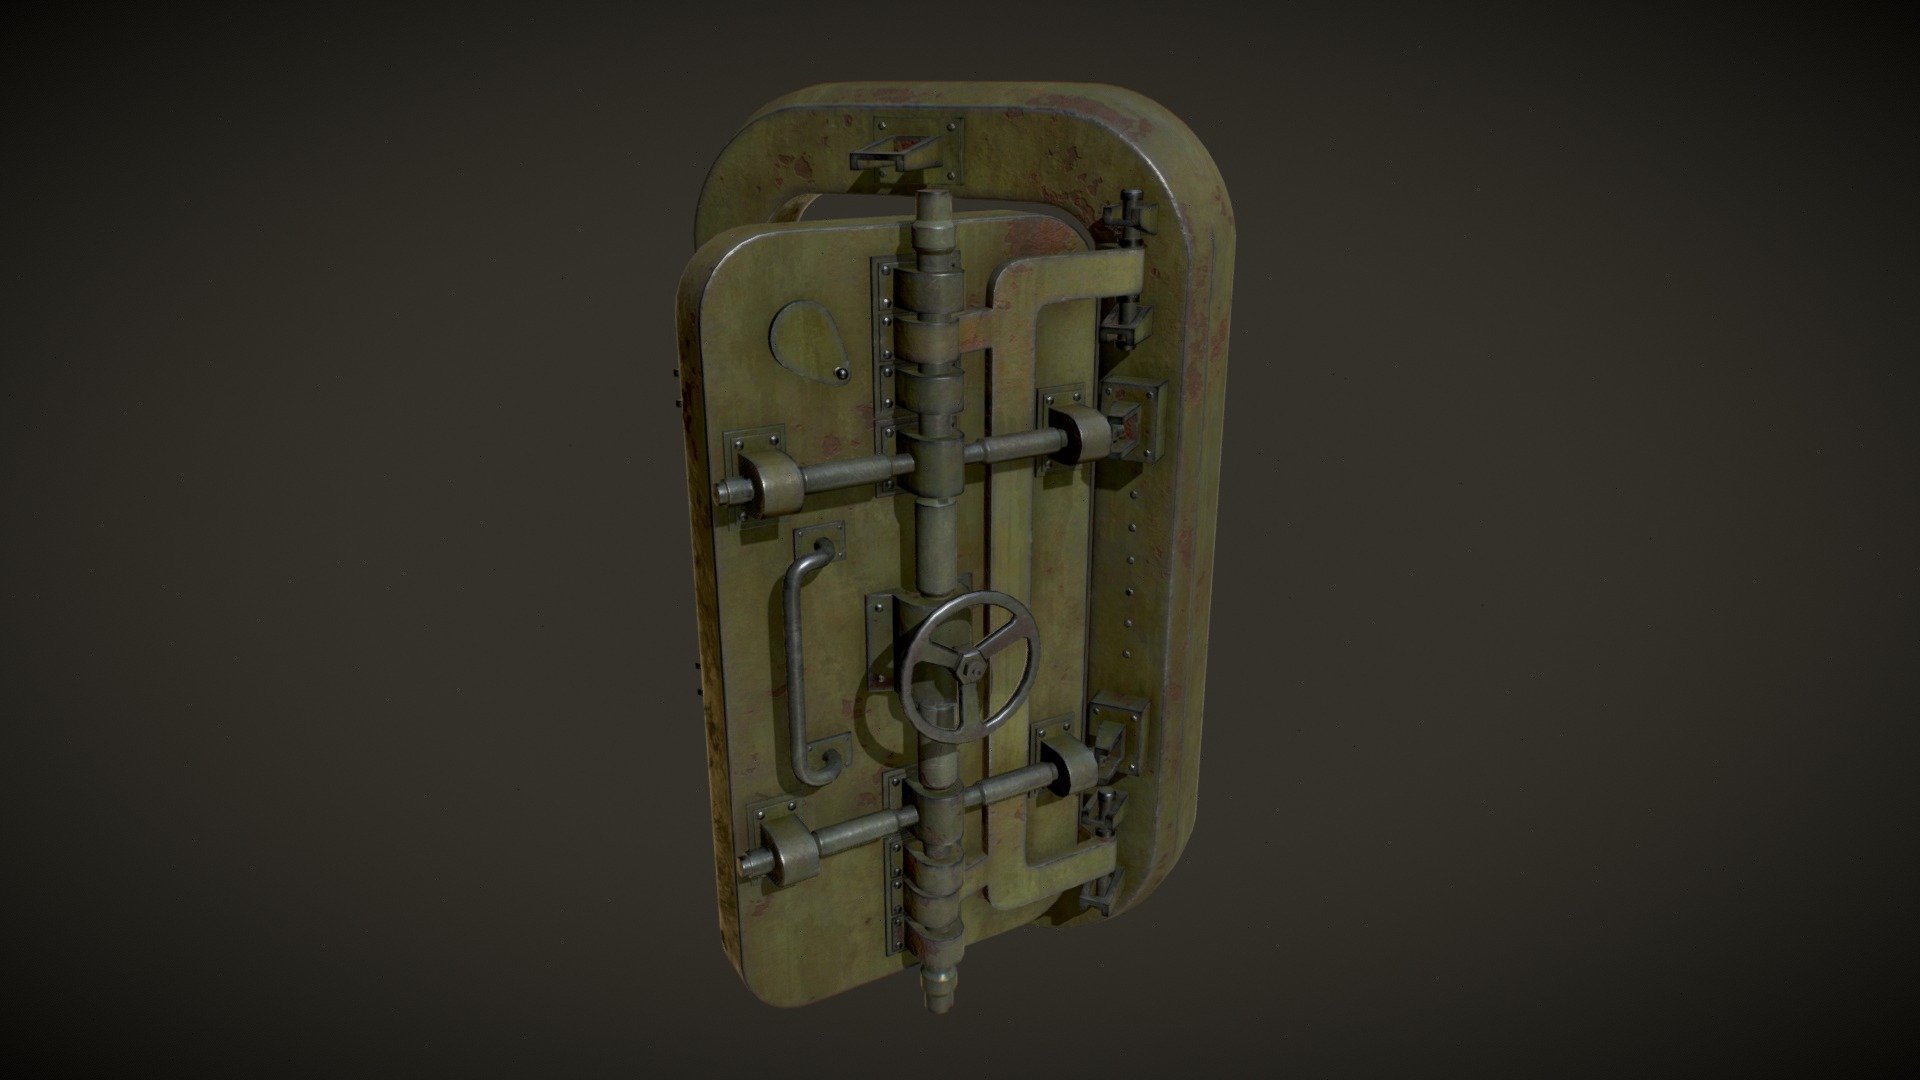 An old metal bunker door is suitable for a survival game.
Obj:https://drive.google.com/file/d/1XdKpYo3cgnSLlM59lMBIxZuxoEHDVAka/view?usp=drive_link - Old metal bunker door - Download Free 3D model by rakutin 3d model